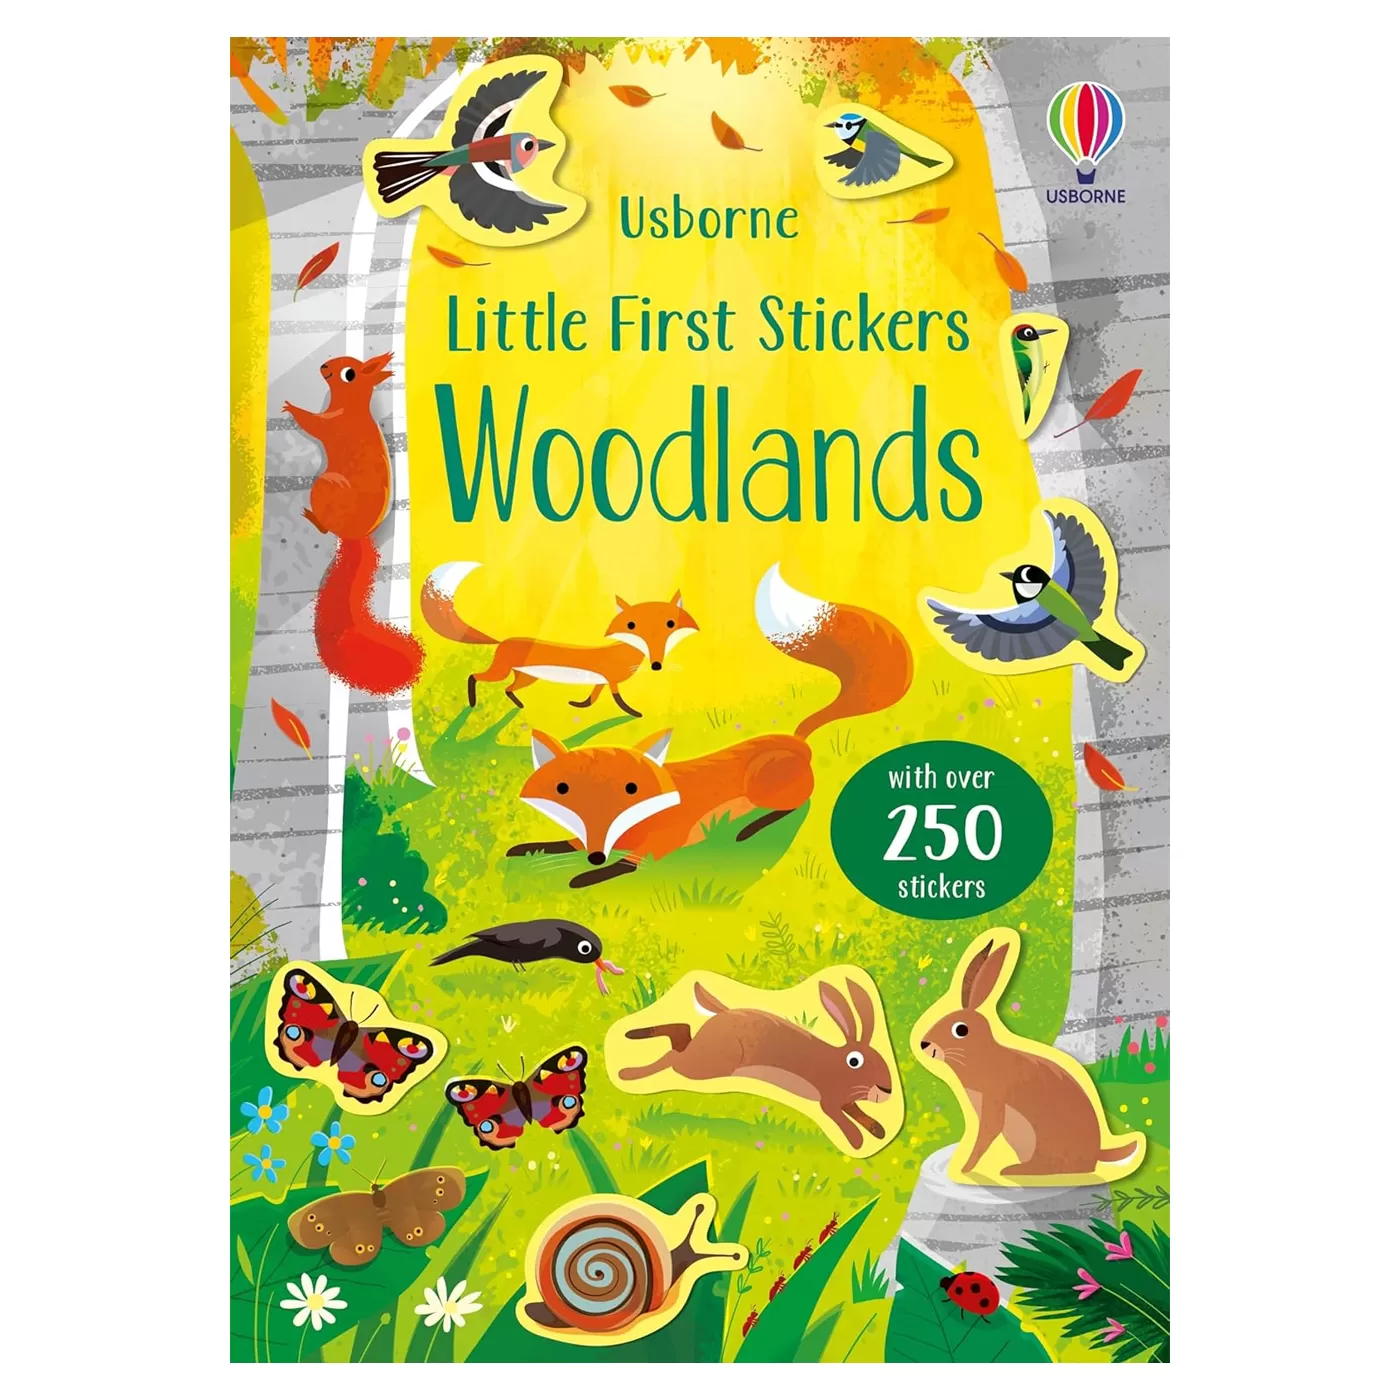  Little First Stickers Woodlands